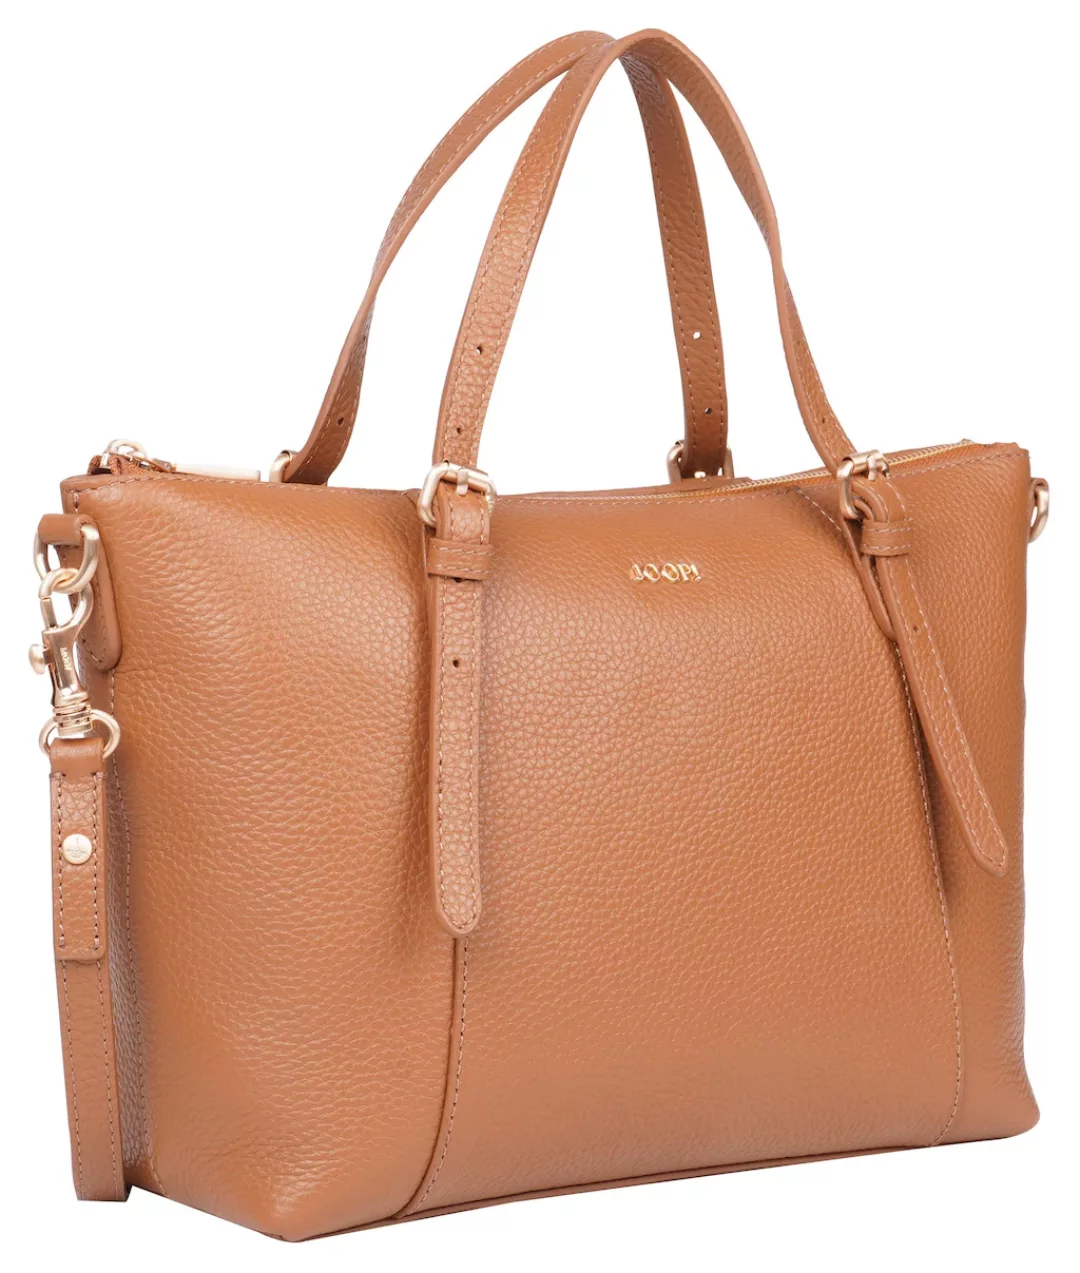 JOOP Handtasche "Handbag Shz", Handtasche Damen günstig online kaufen